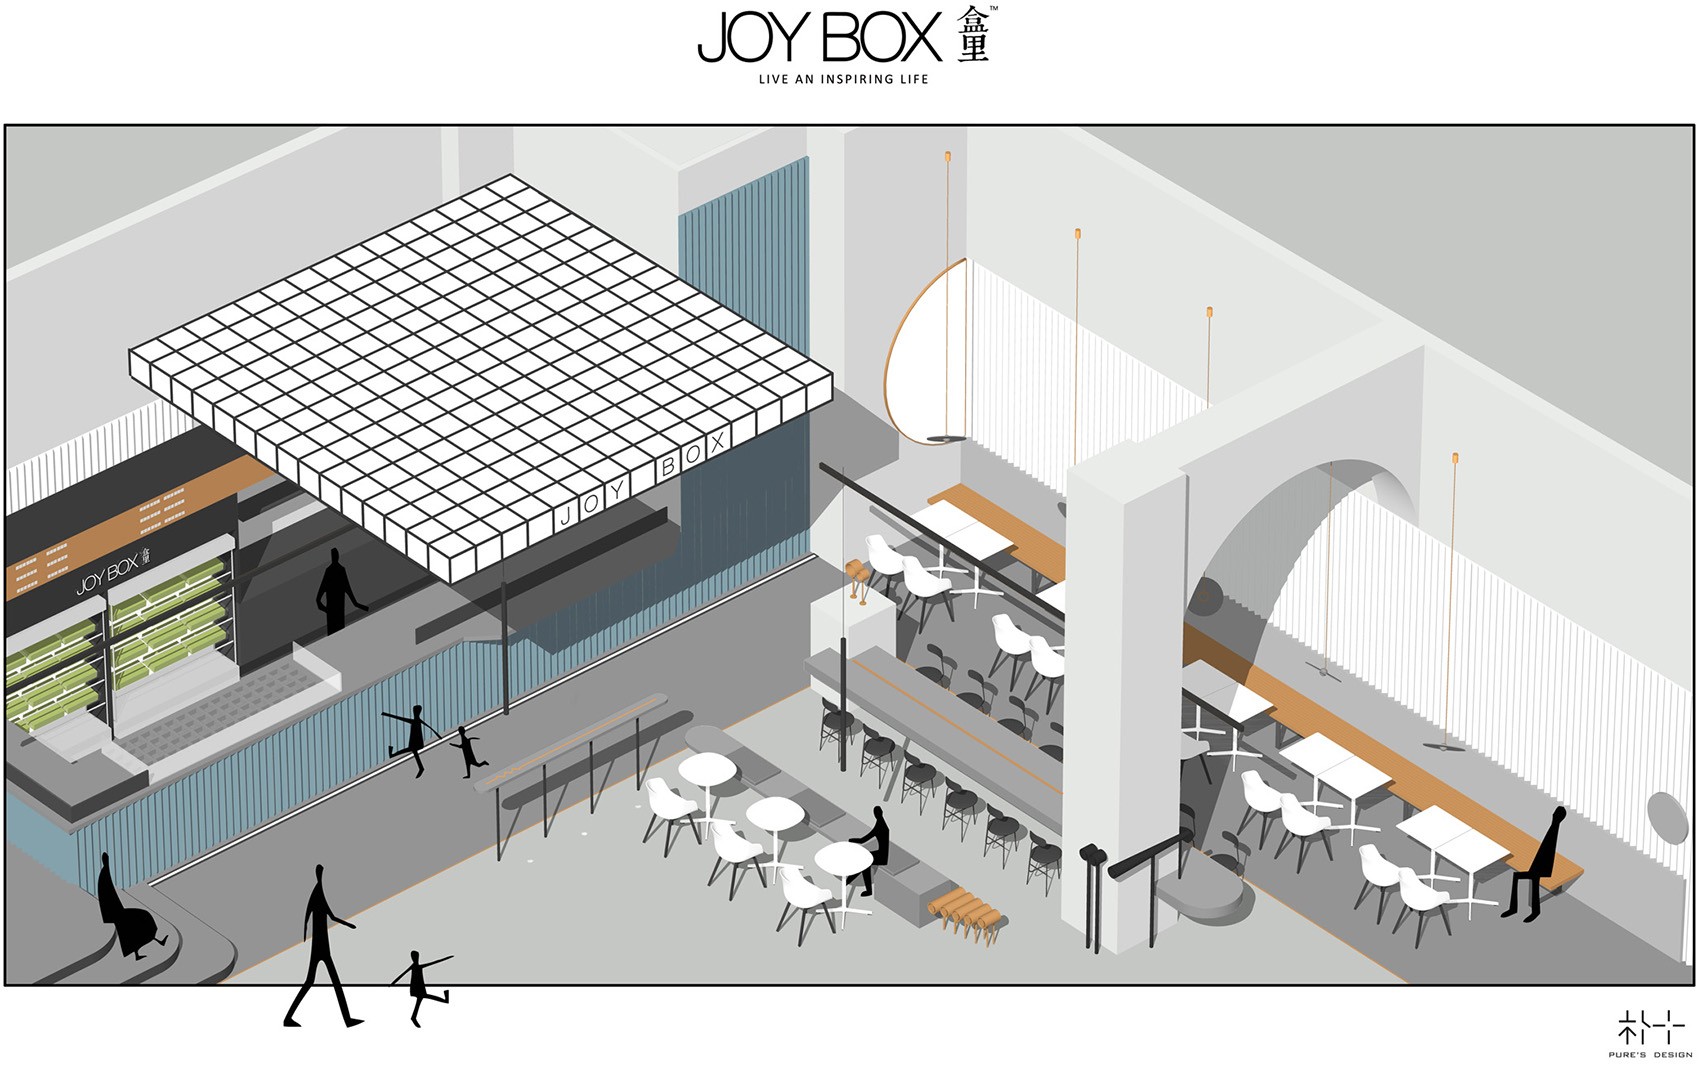 019-joybox-restaurant-china-by-pures-design.jpg